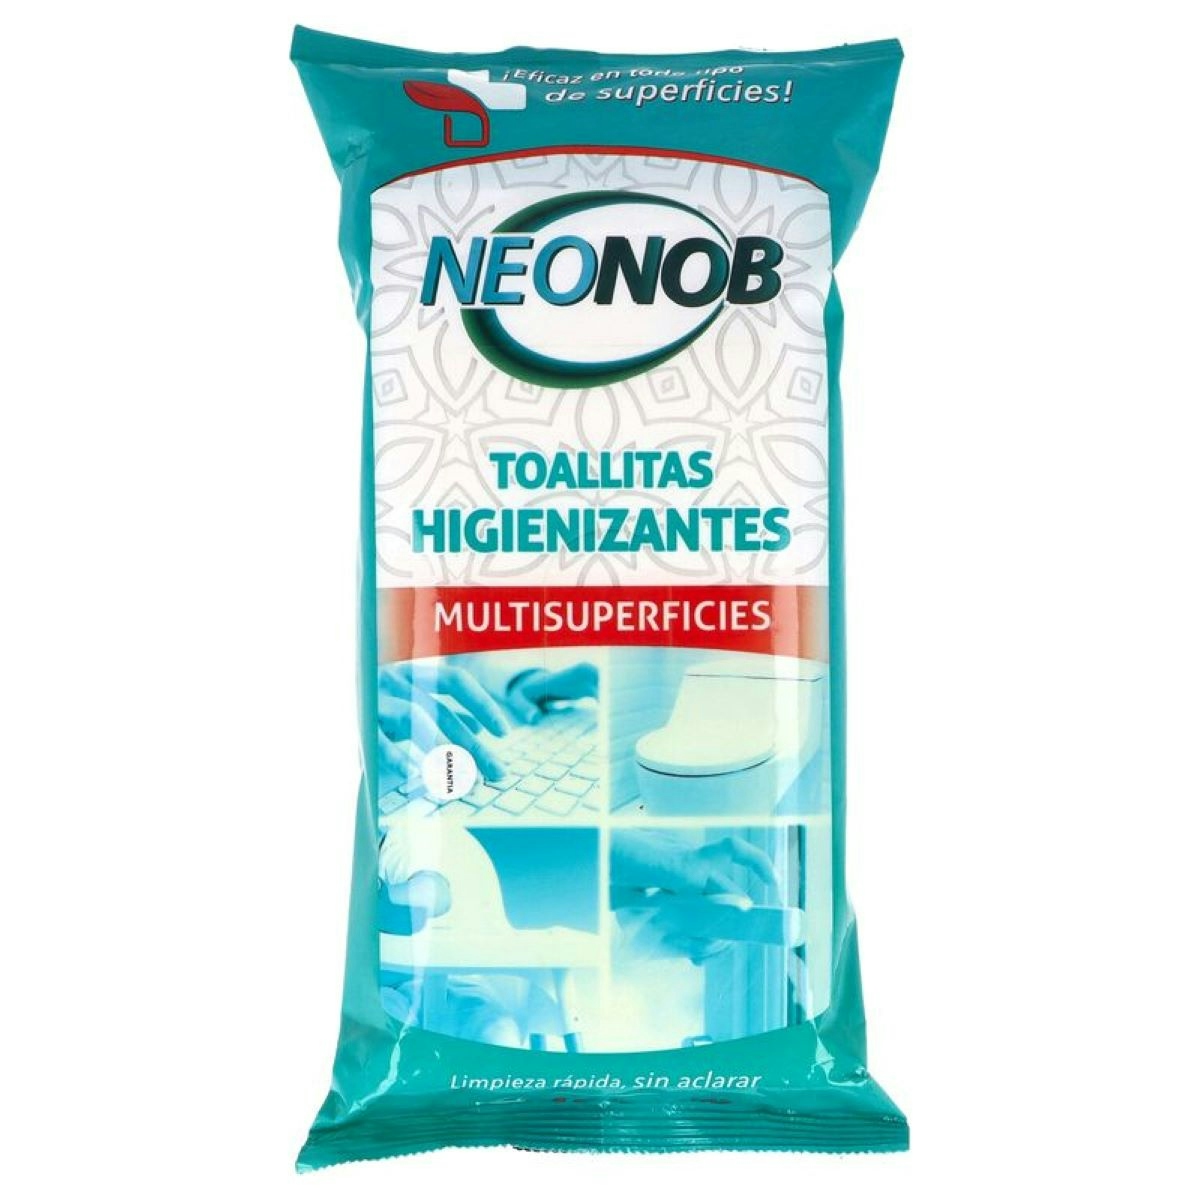 Toallita Higienizante Multisuperficies NEONOB 48 uds